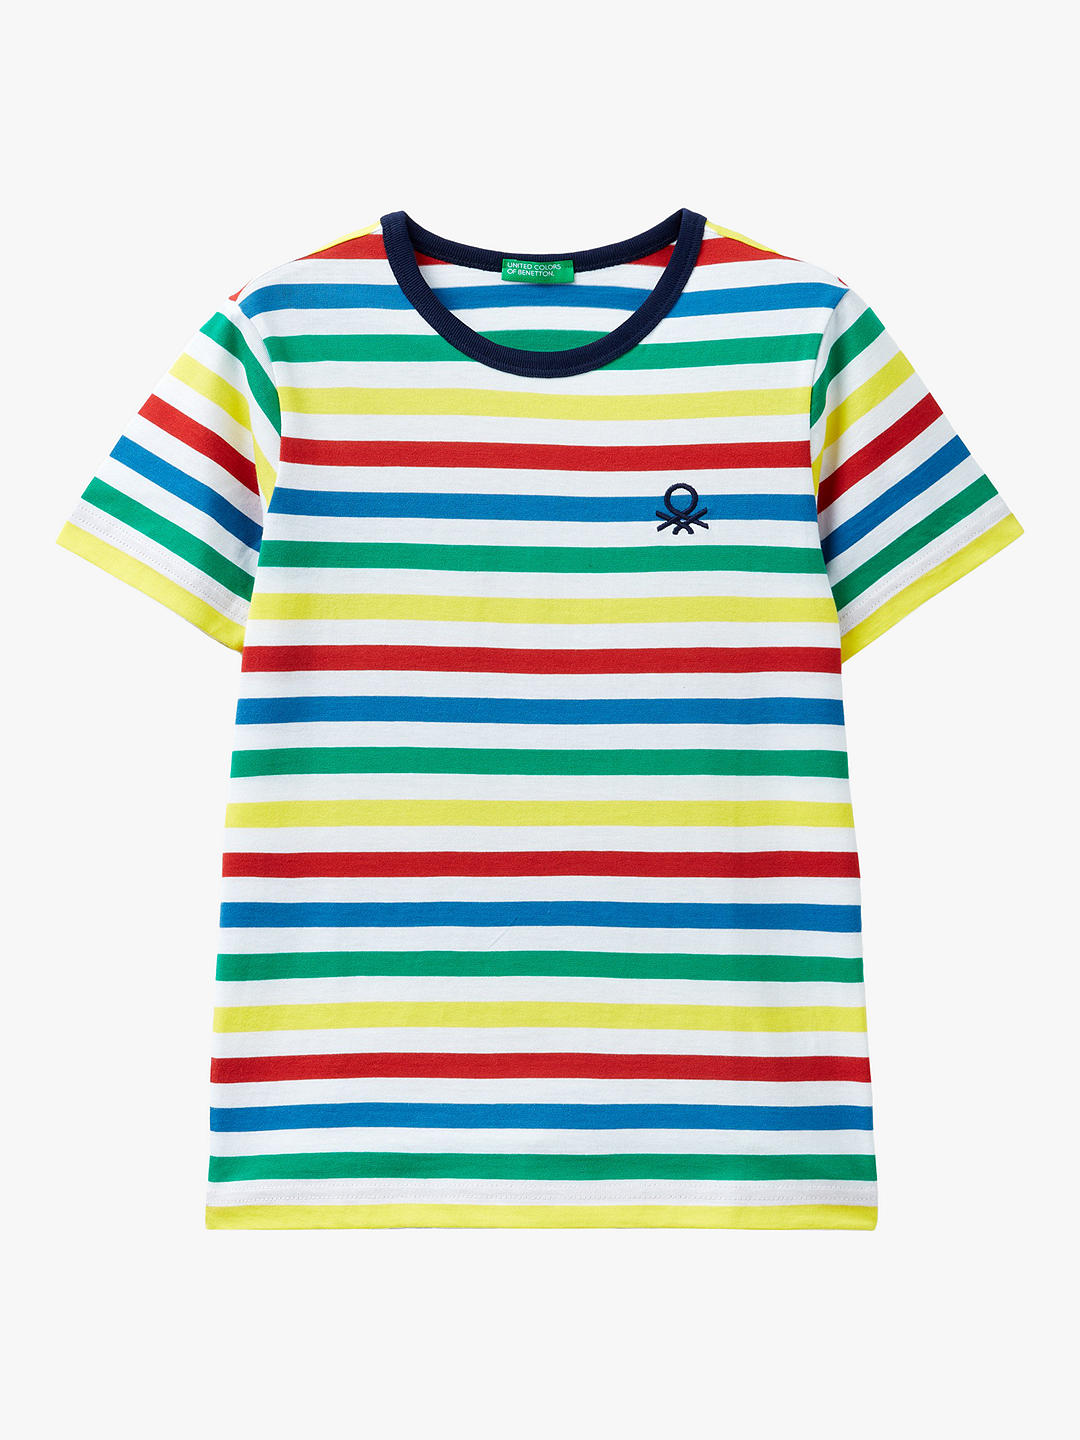 Benetton Kids' Stripe Jersey T-Shirt, Multi